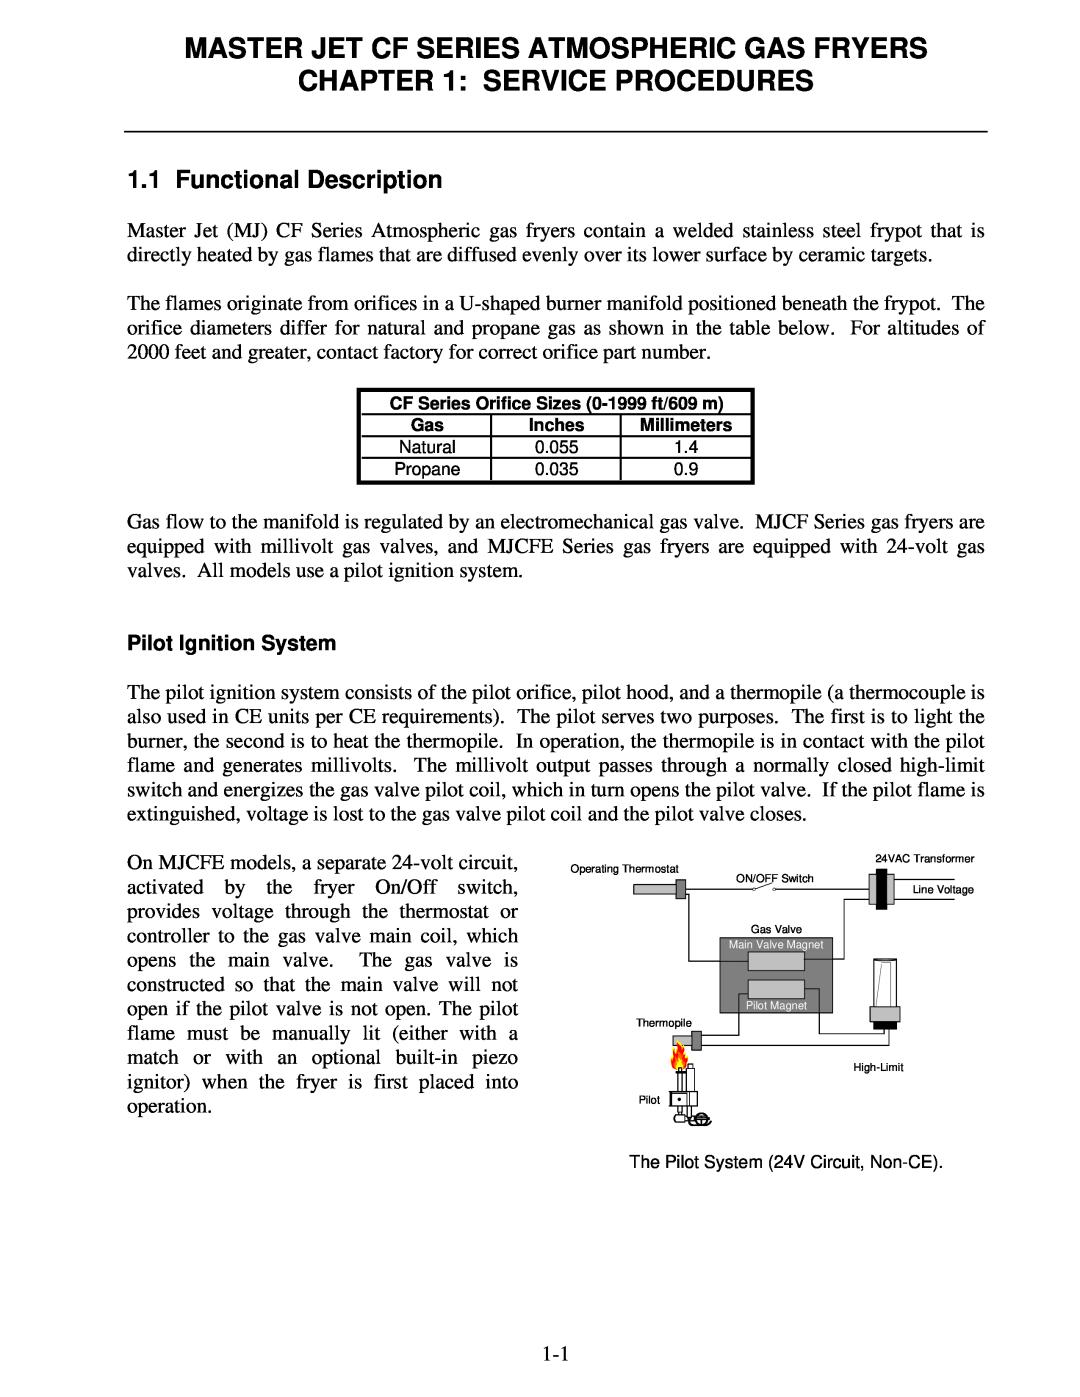 Frymaster MJCFEC, FMCFEC, KJ3FC Master Jet Cf Series Atmospheric Gas Fryers, Service Procedures, Functional Description 